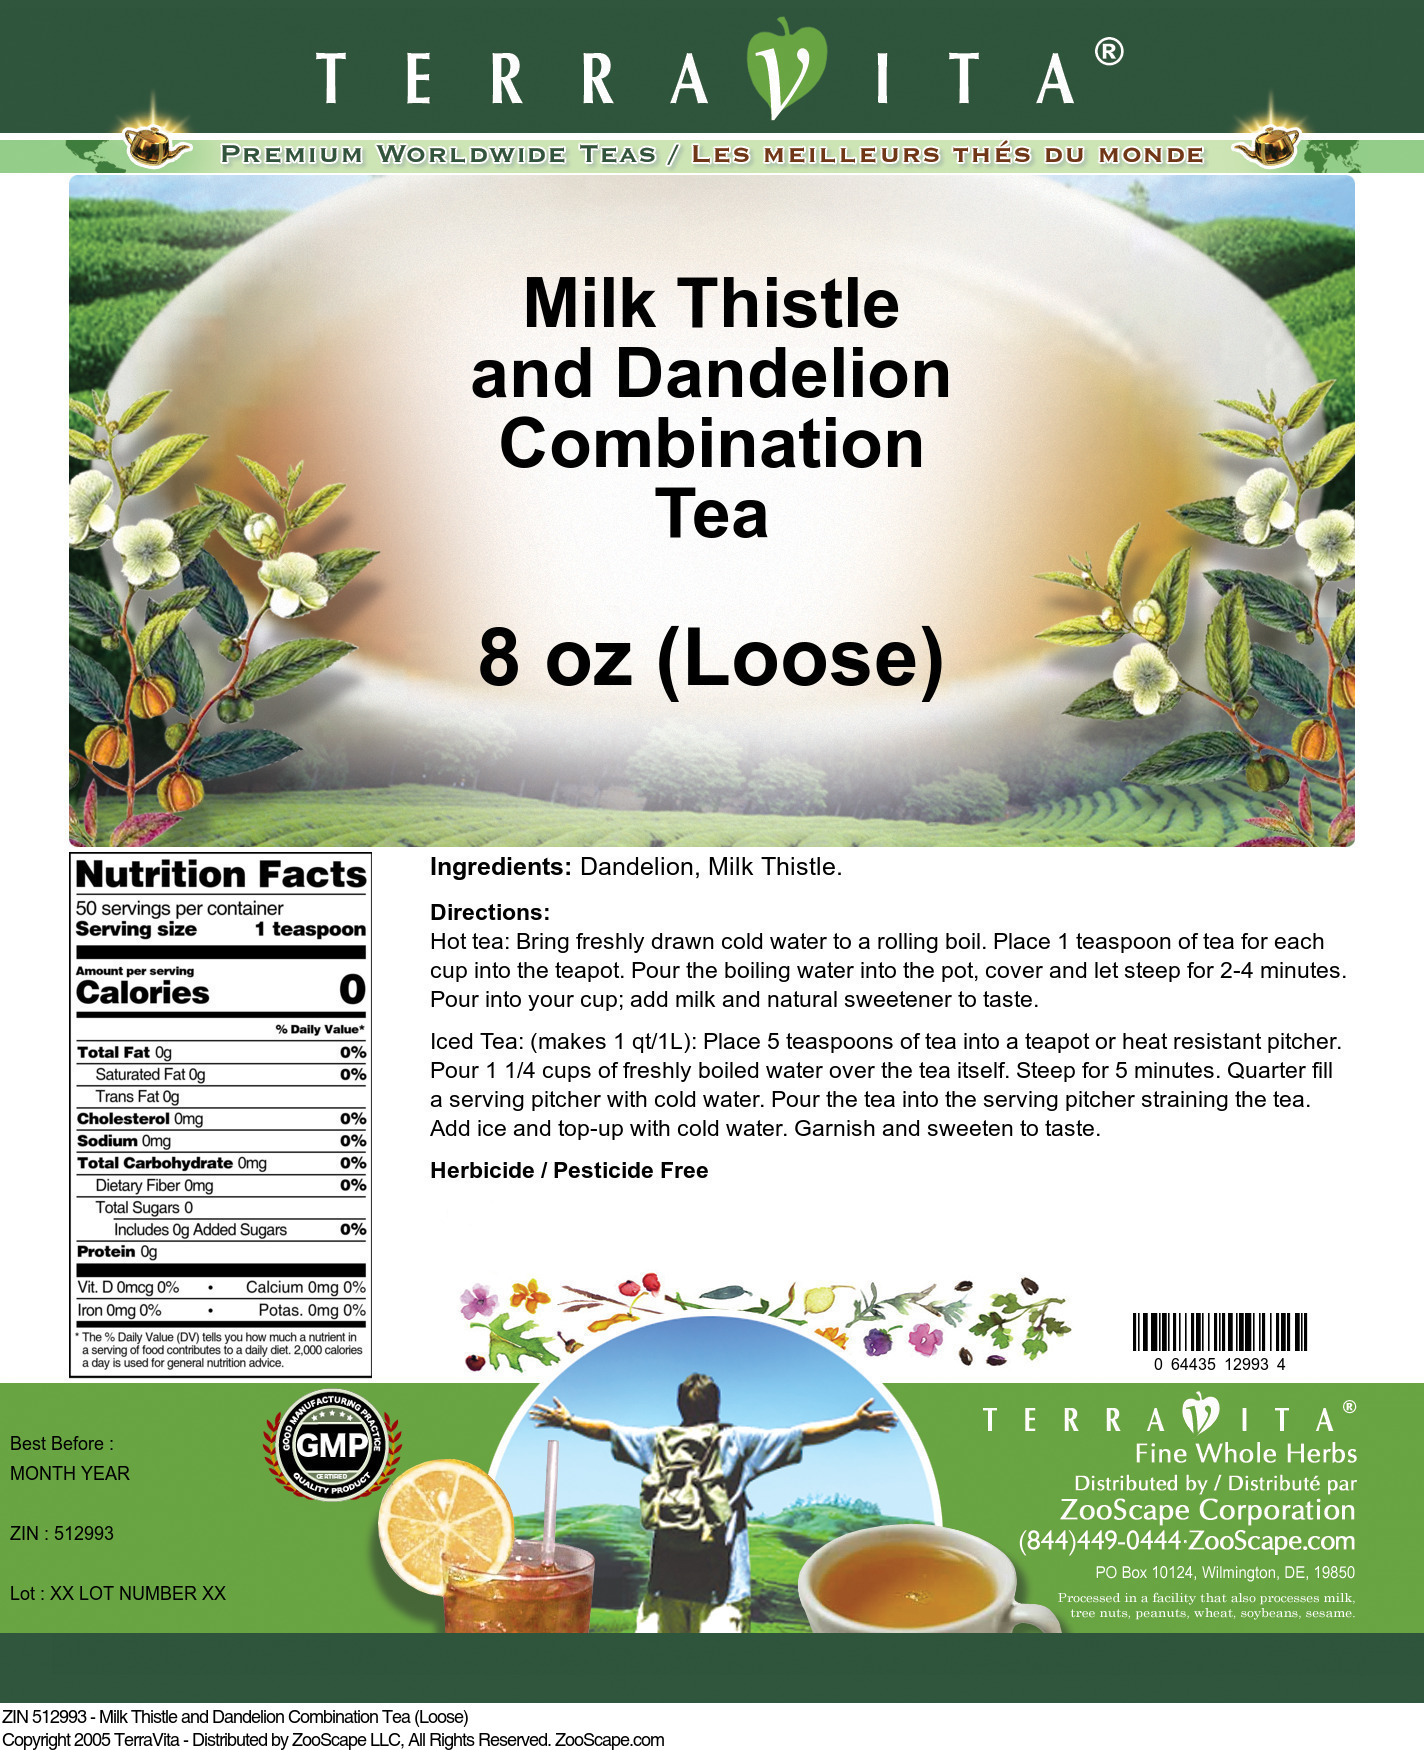 Milk Thistle and Dandelion Combination Tea (Loose) - Label